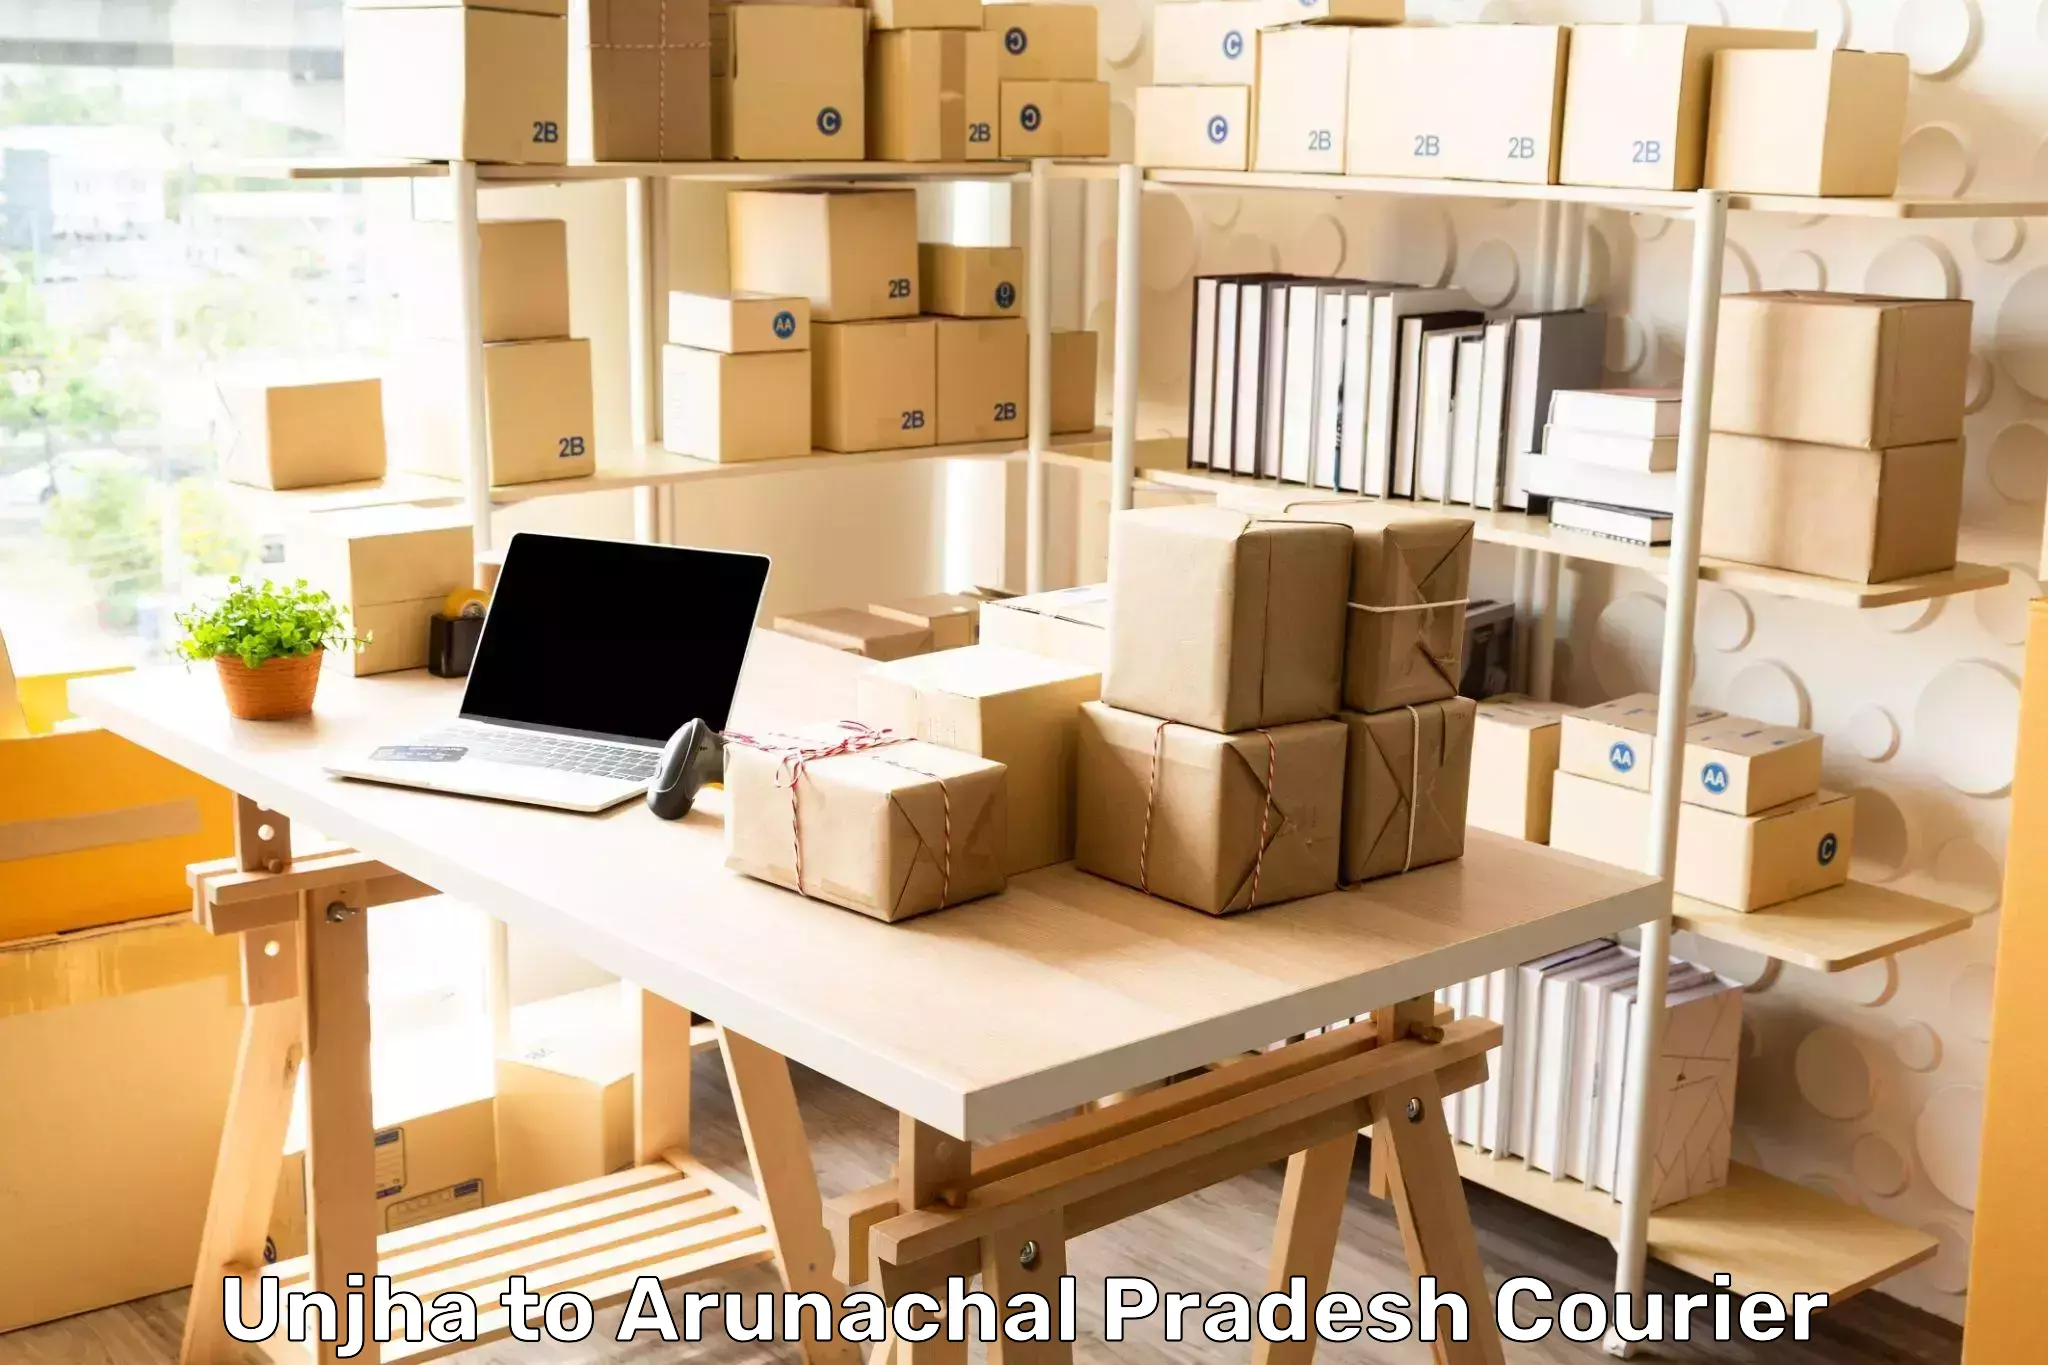 Local courier options in Unjha to Arunachal Pradesh